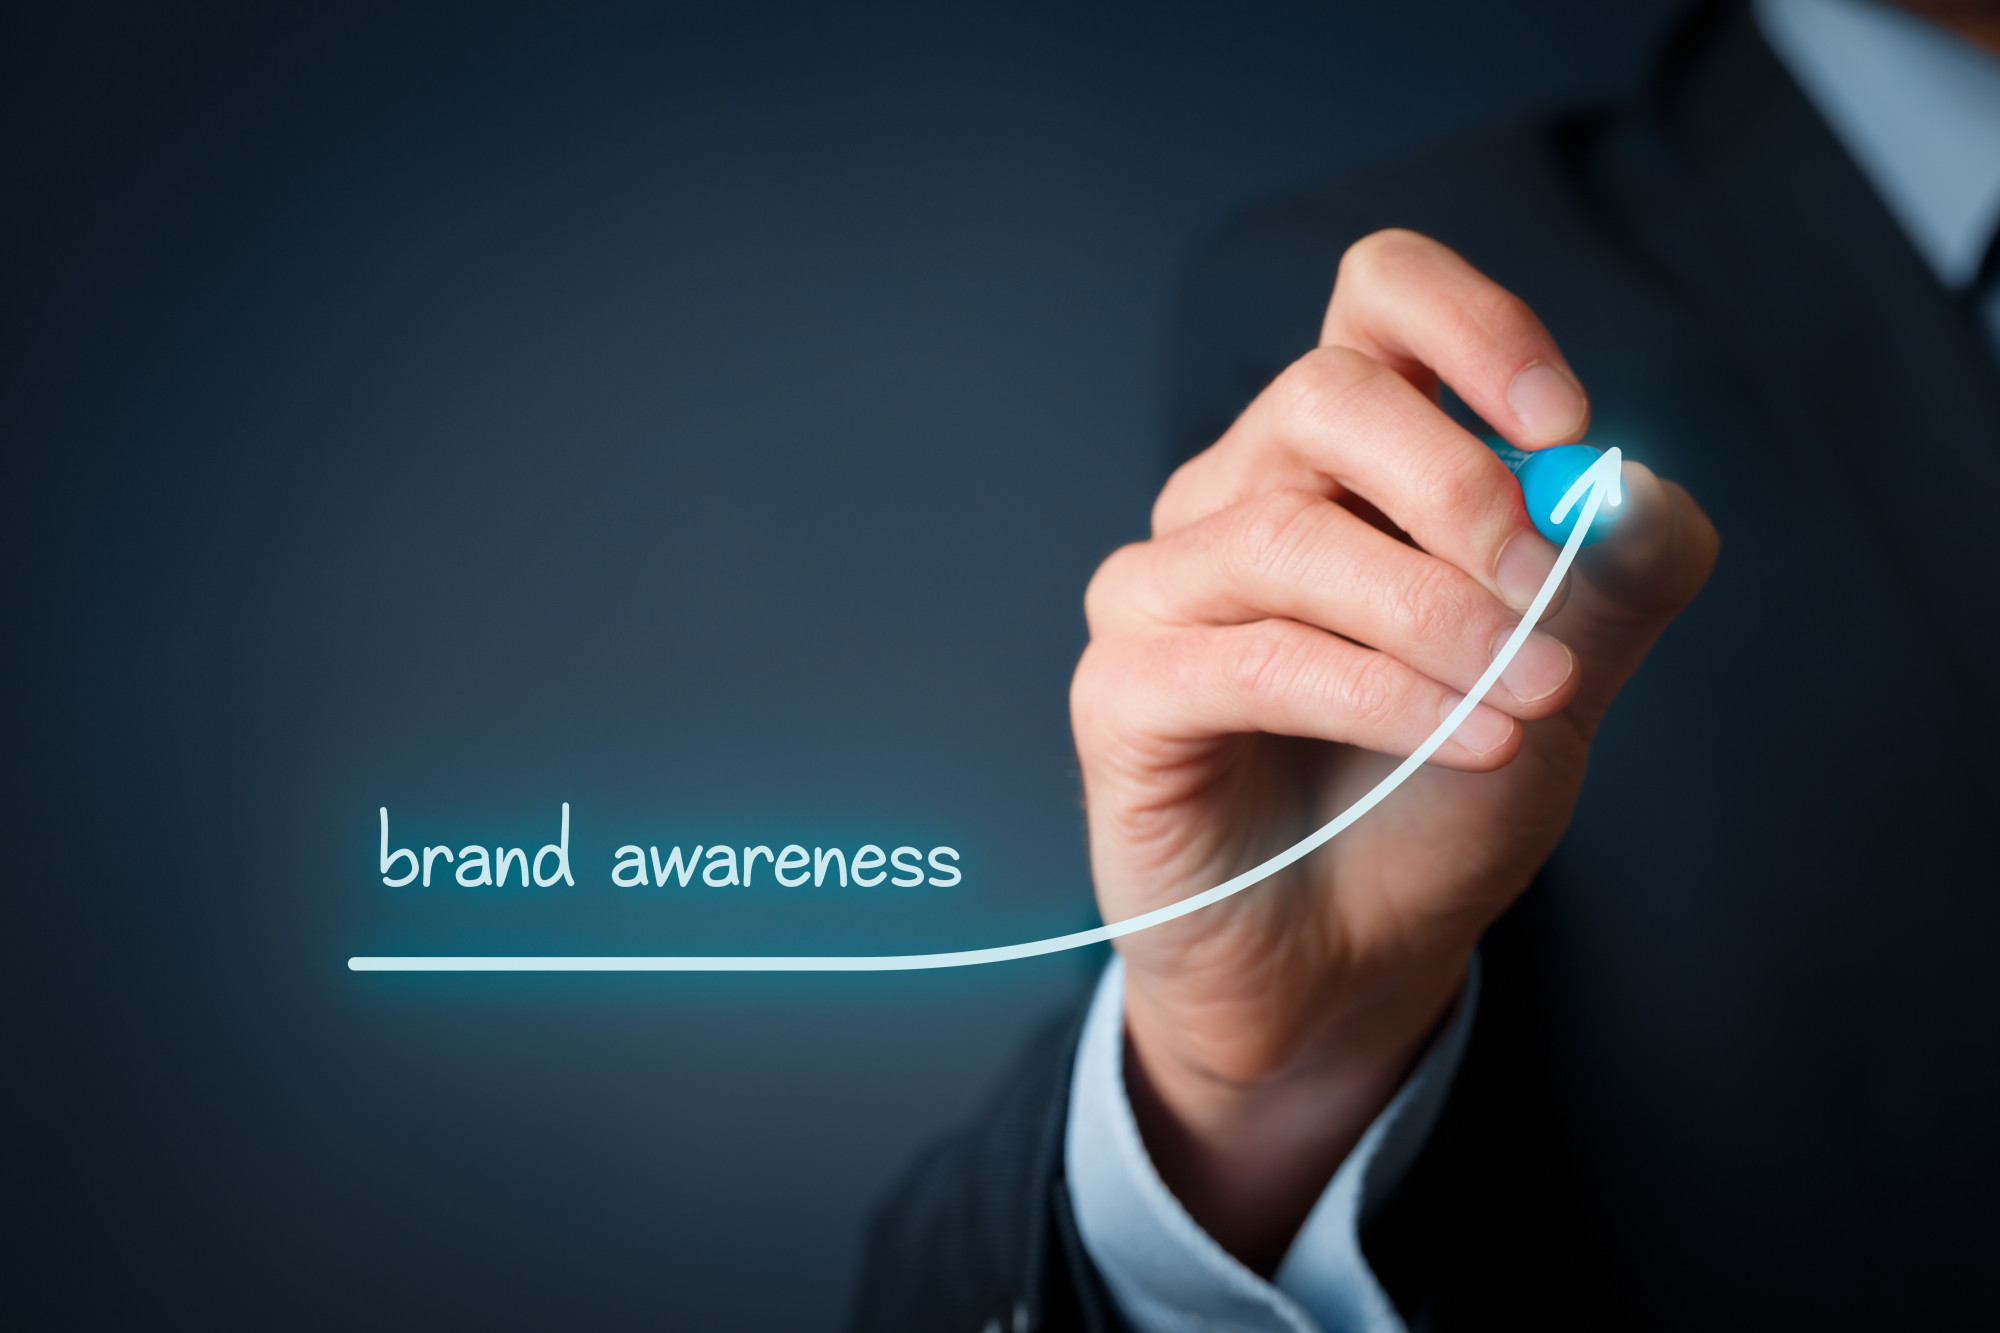 how to build brand awareness